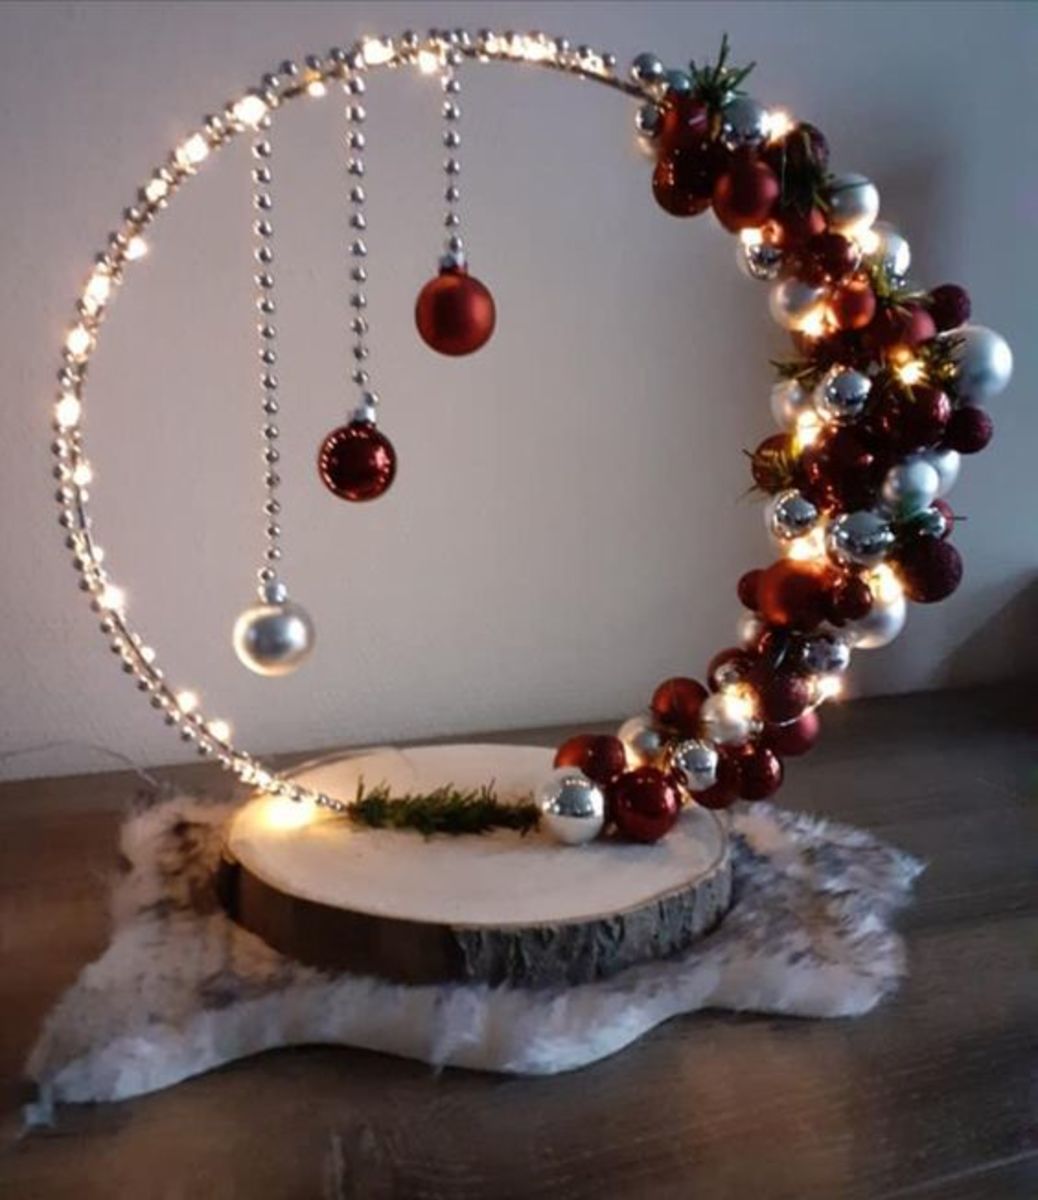 christmas-hula-hoop-decoration-ideas